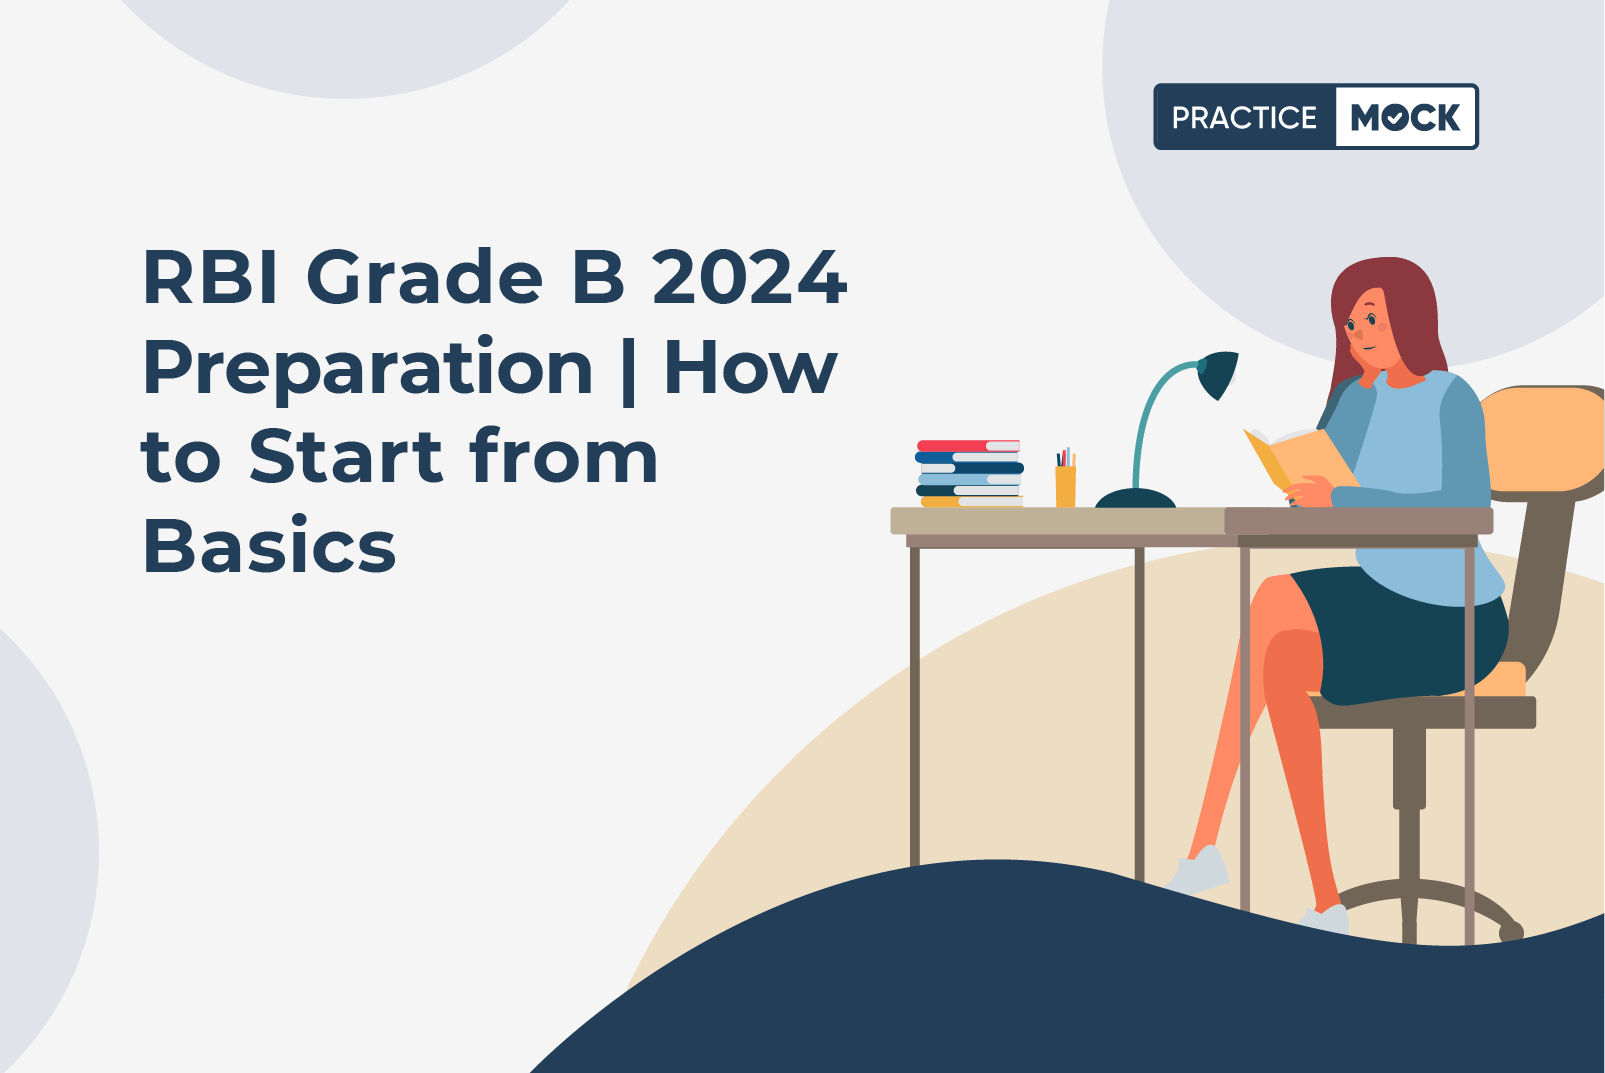 RBI Grade B 2024 Preparation How to Start from Basics